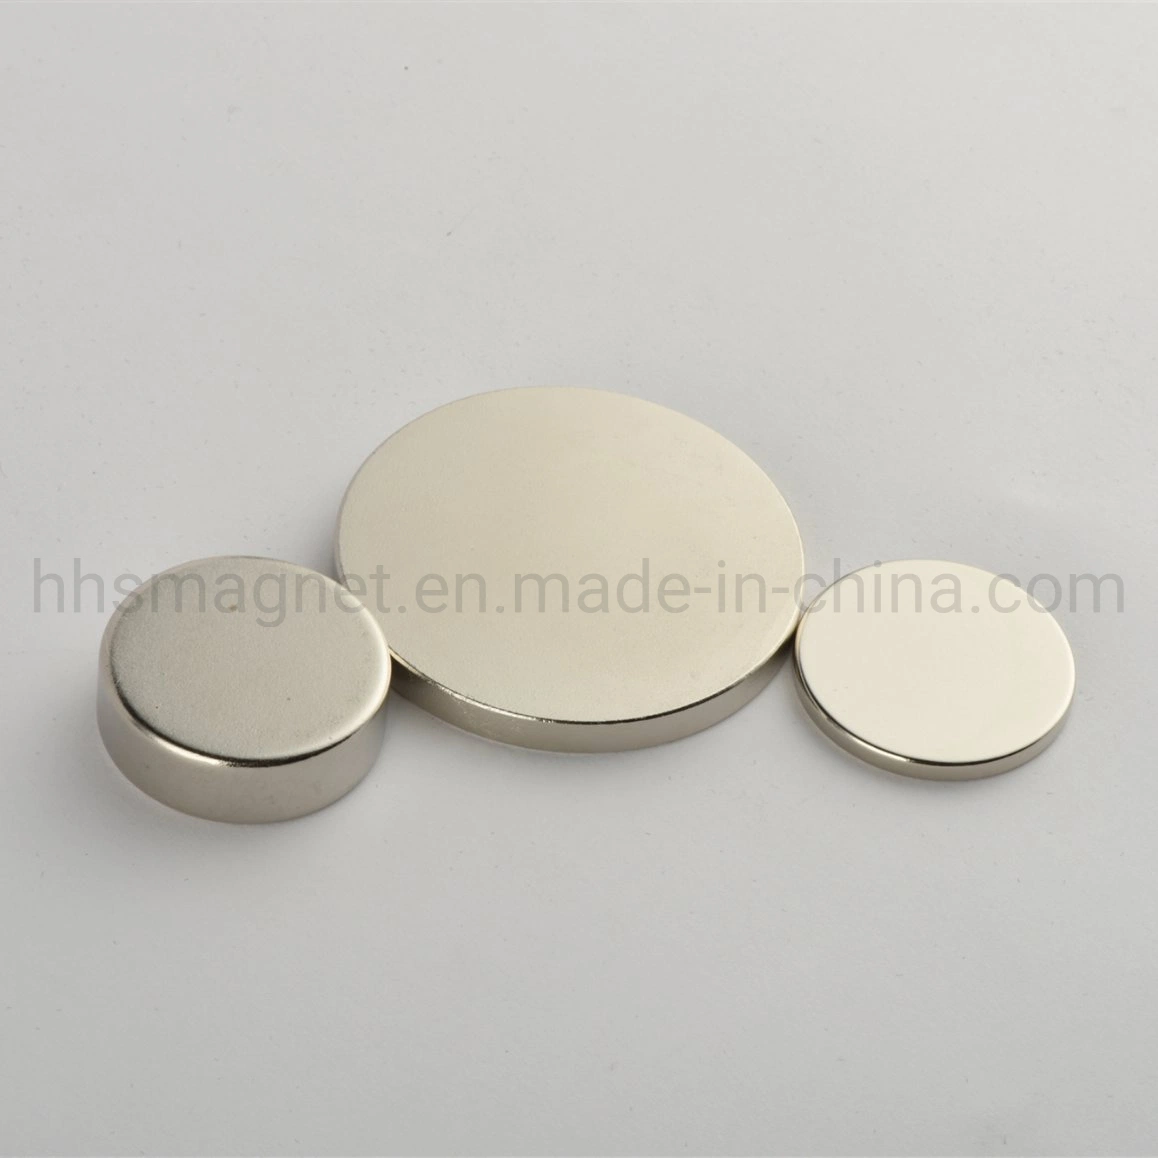 Rare Earth Neodymium Permanent NdFeB Disc Magnet with Nickel Coating